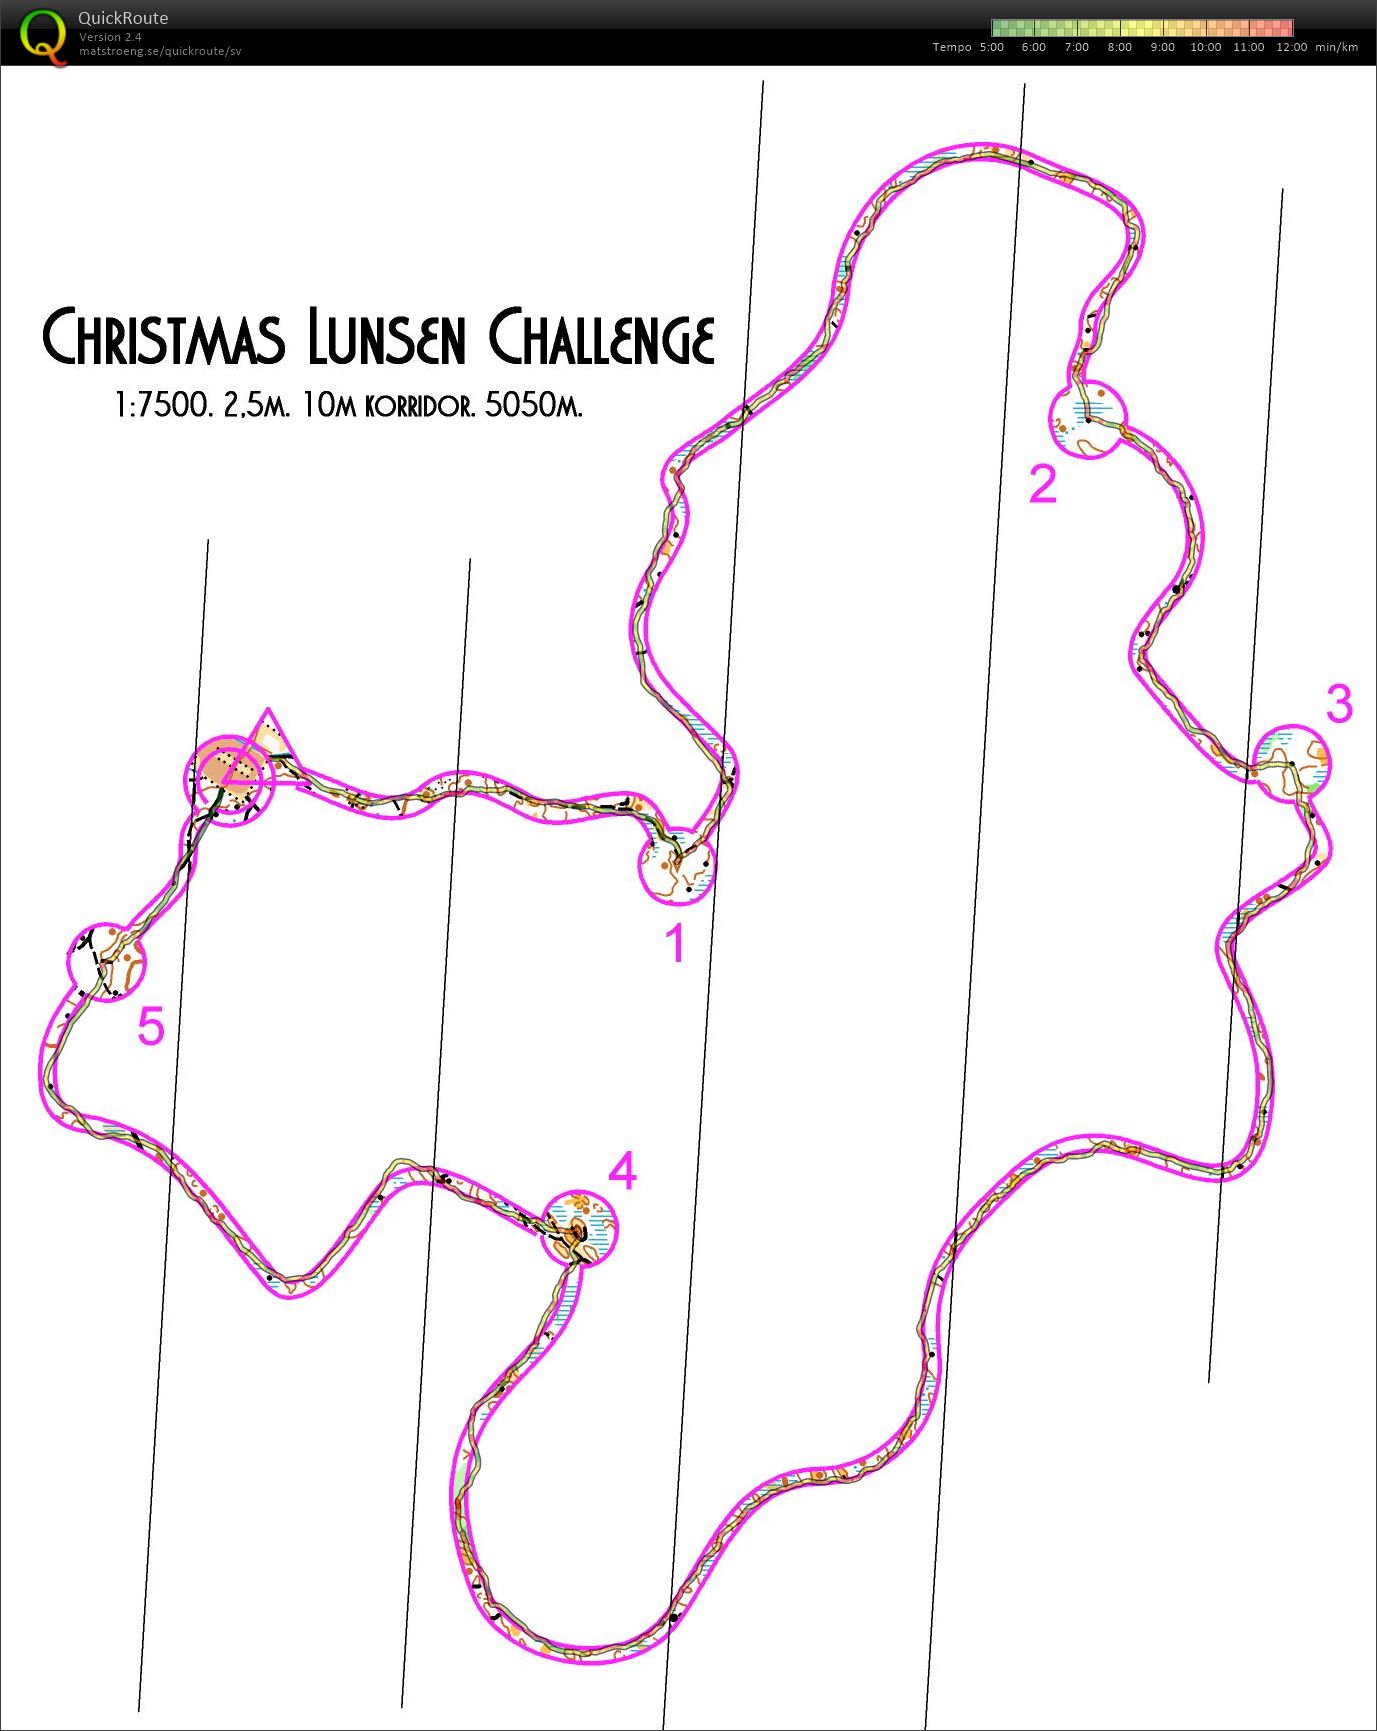 Christmas Lunsen Challenge (24-12-2016)